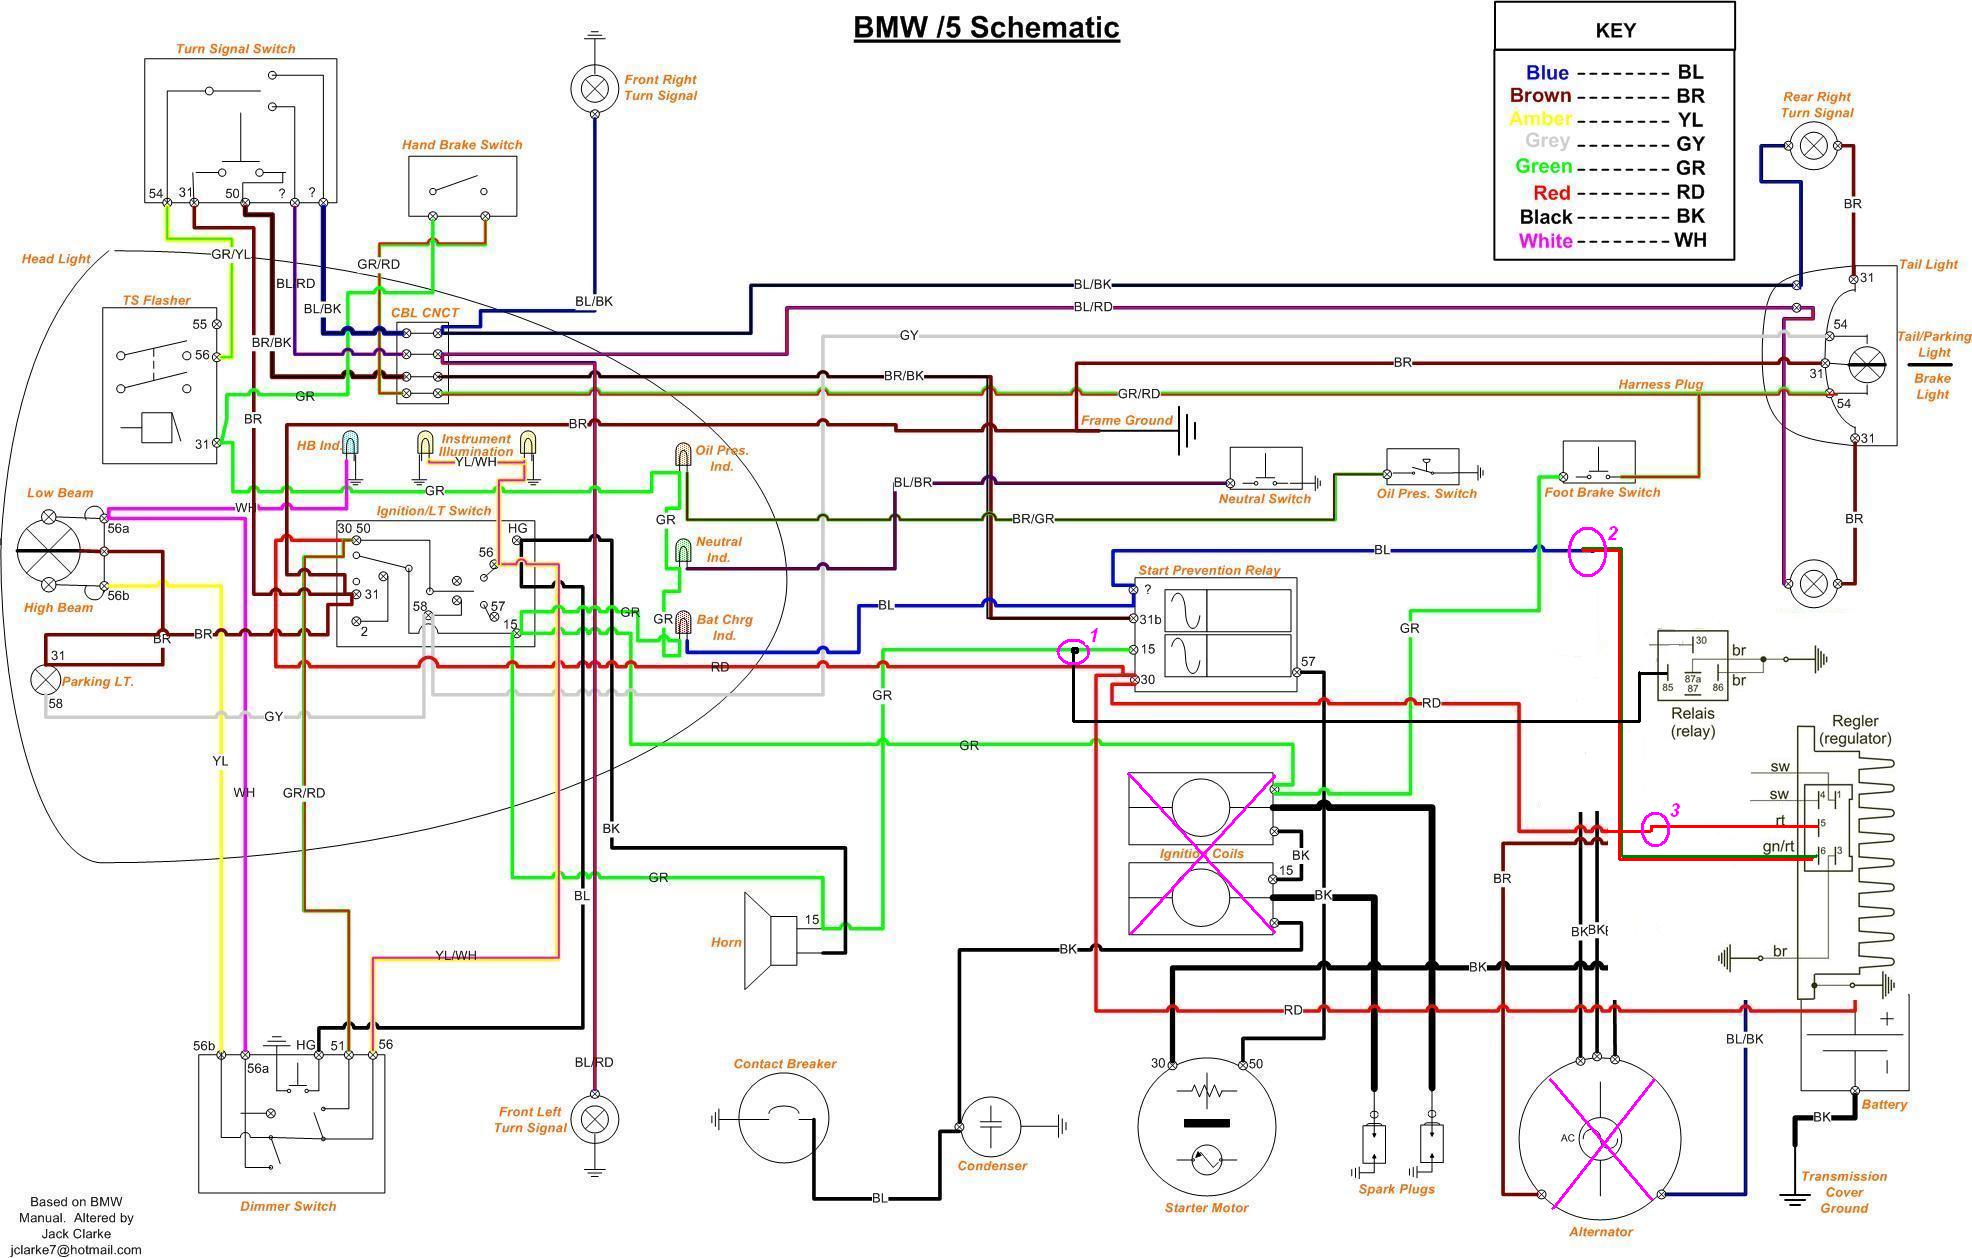 BMW 6/7 benelli wiring diagram 